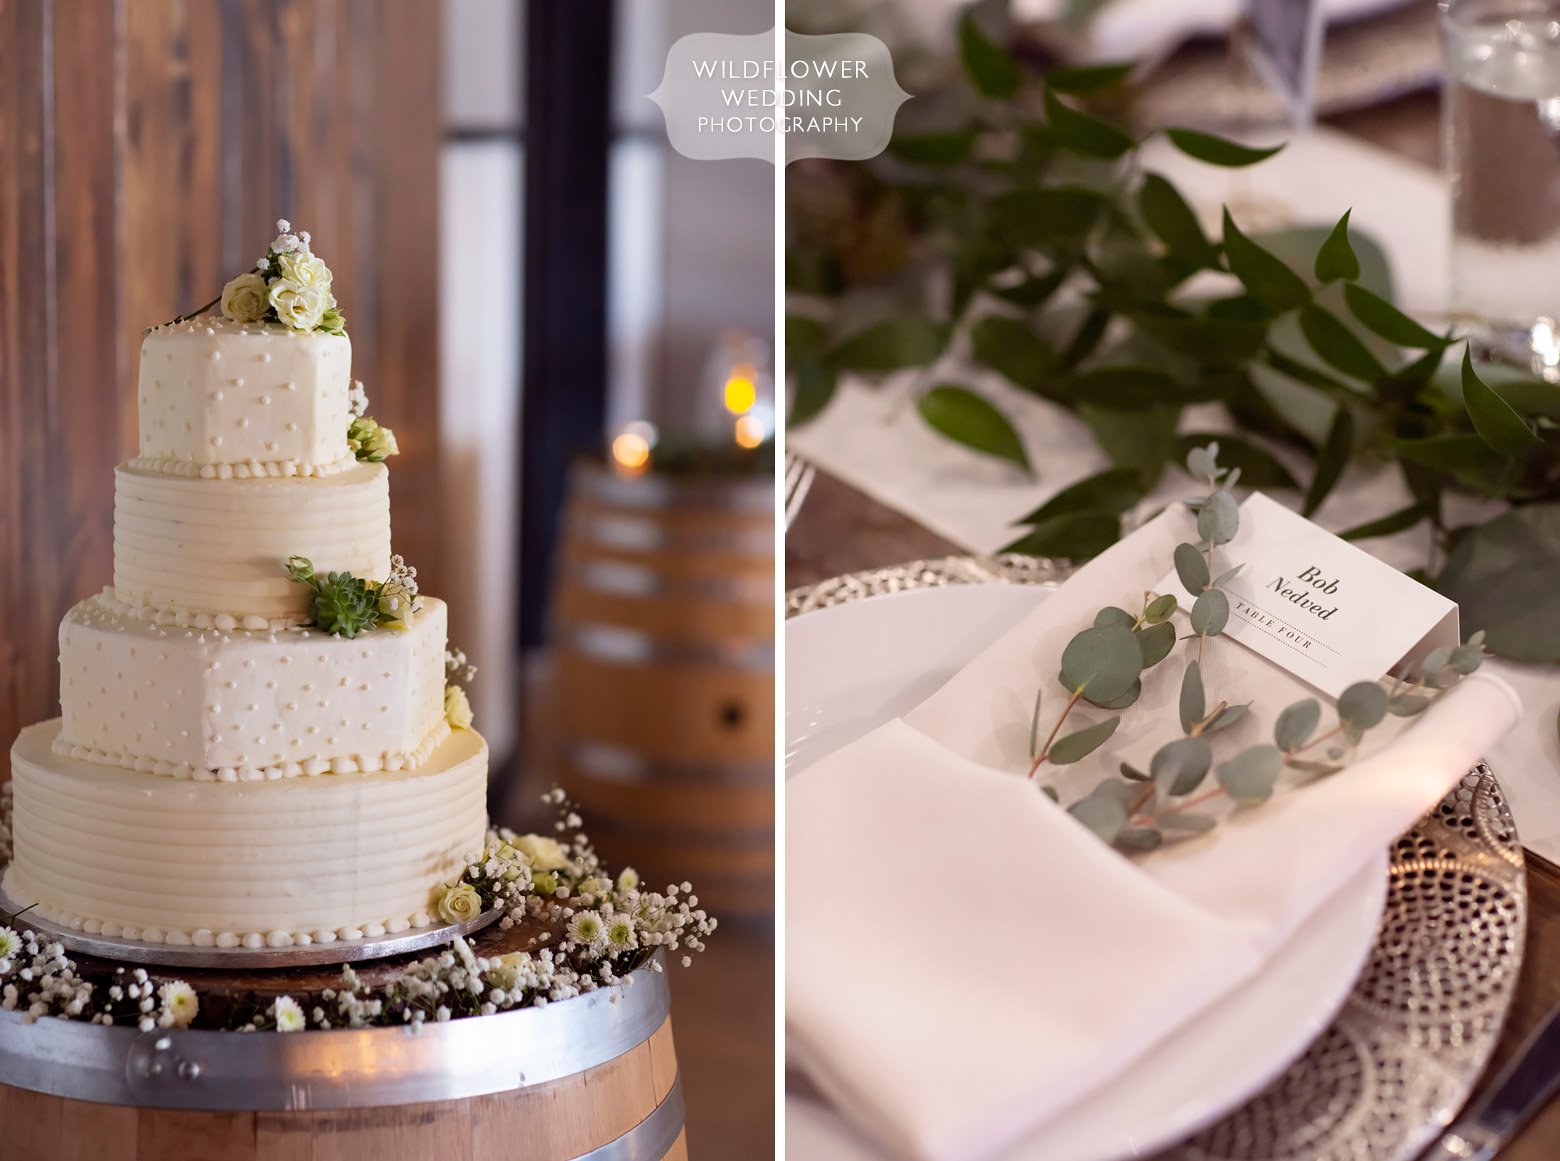 Simple white wedding cake and eucalyptus at Cooper's Ridge.